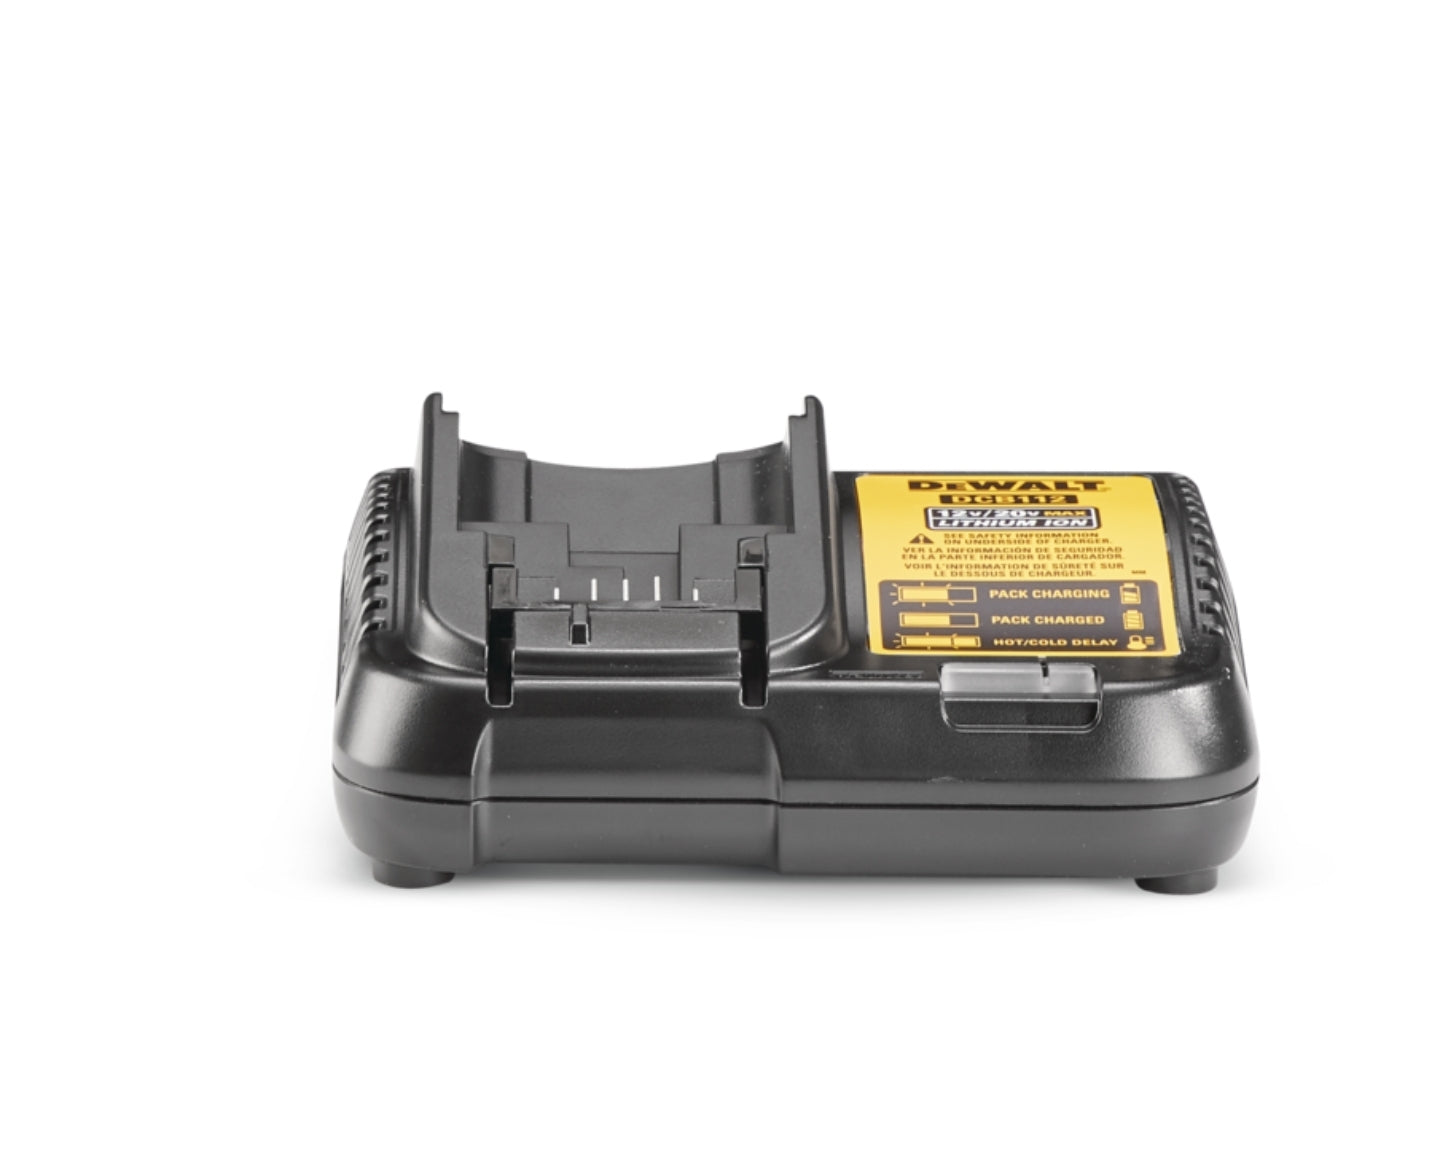 DEWALT DCK283D2 20V MAX XR Brushless Cordless Drill, Impact Driver, Battery & Charger Combo Kit

#054-2345-0